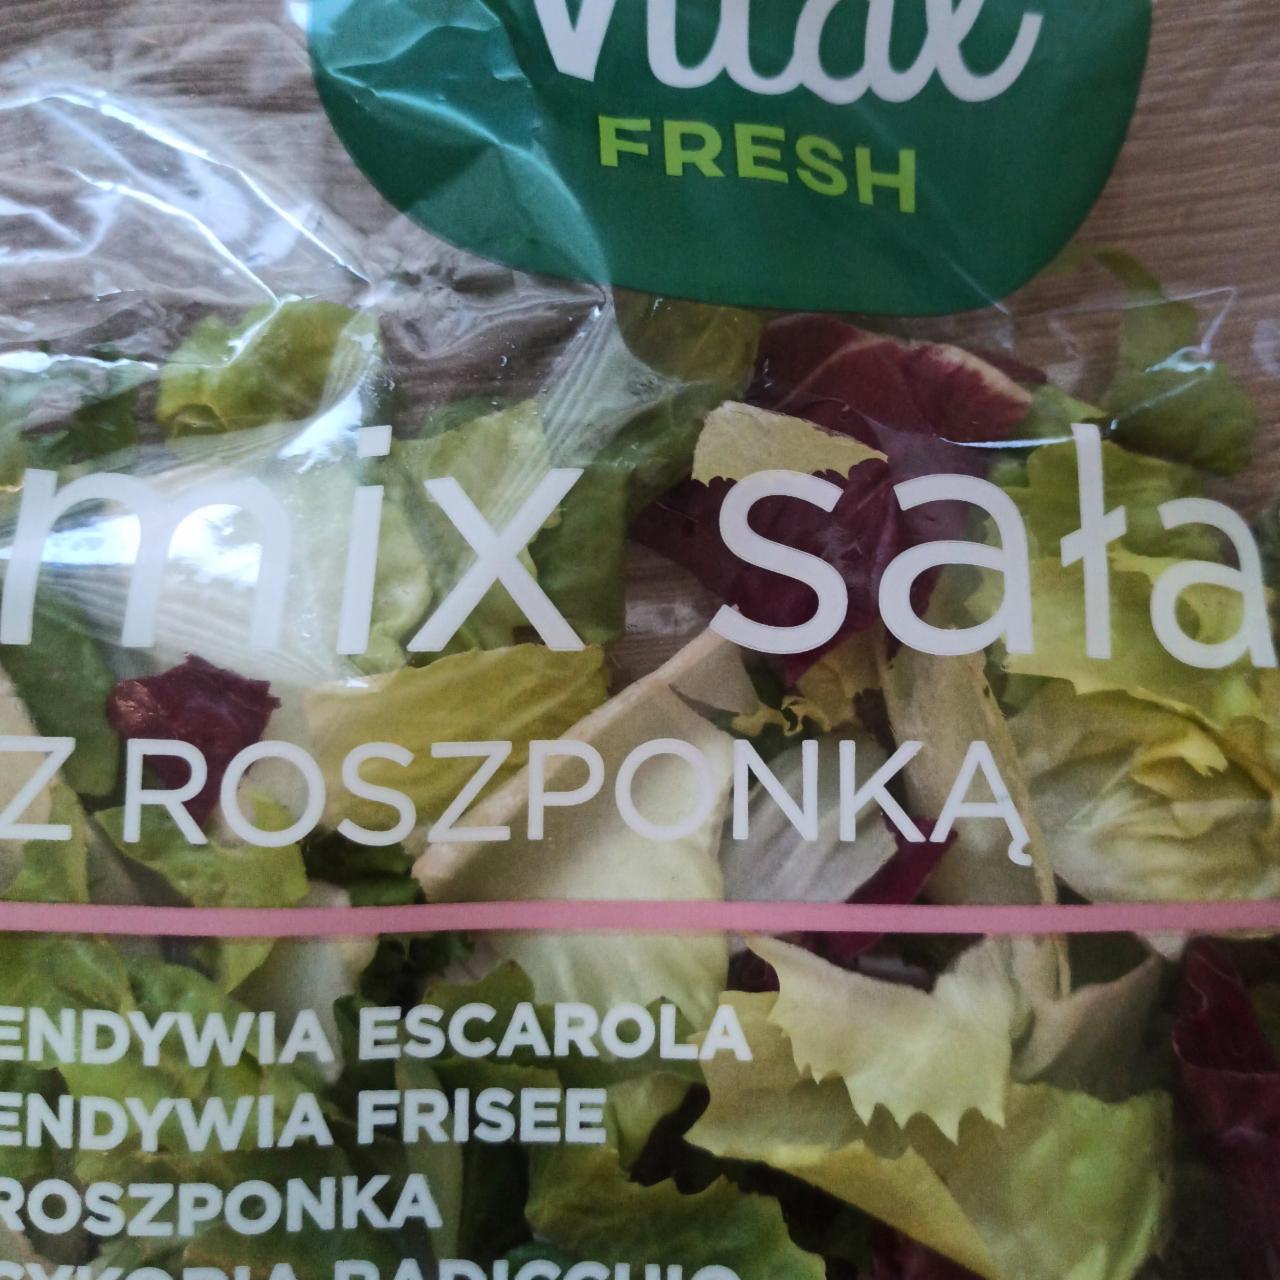 Fotografie - Mix salat z roszponka Vital Fresh